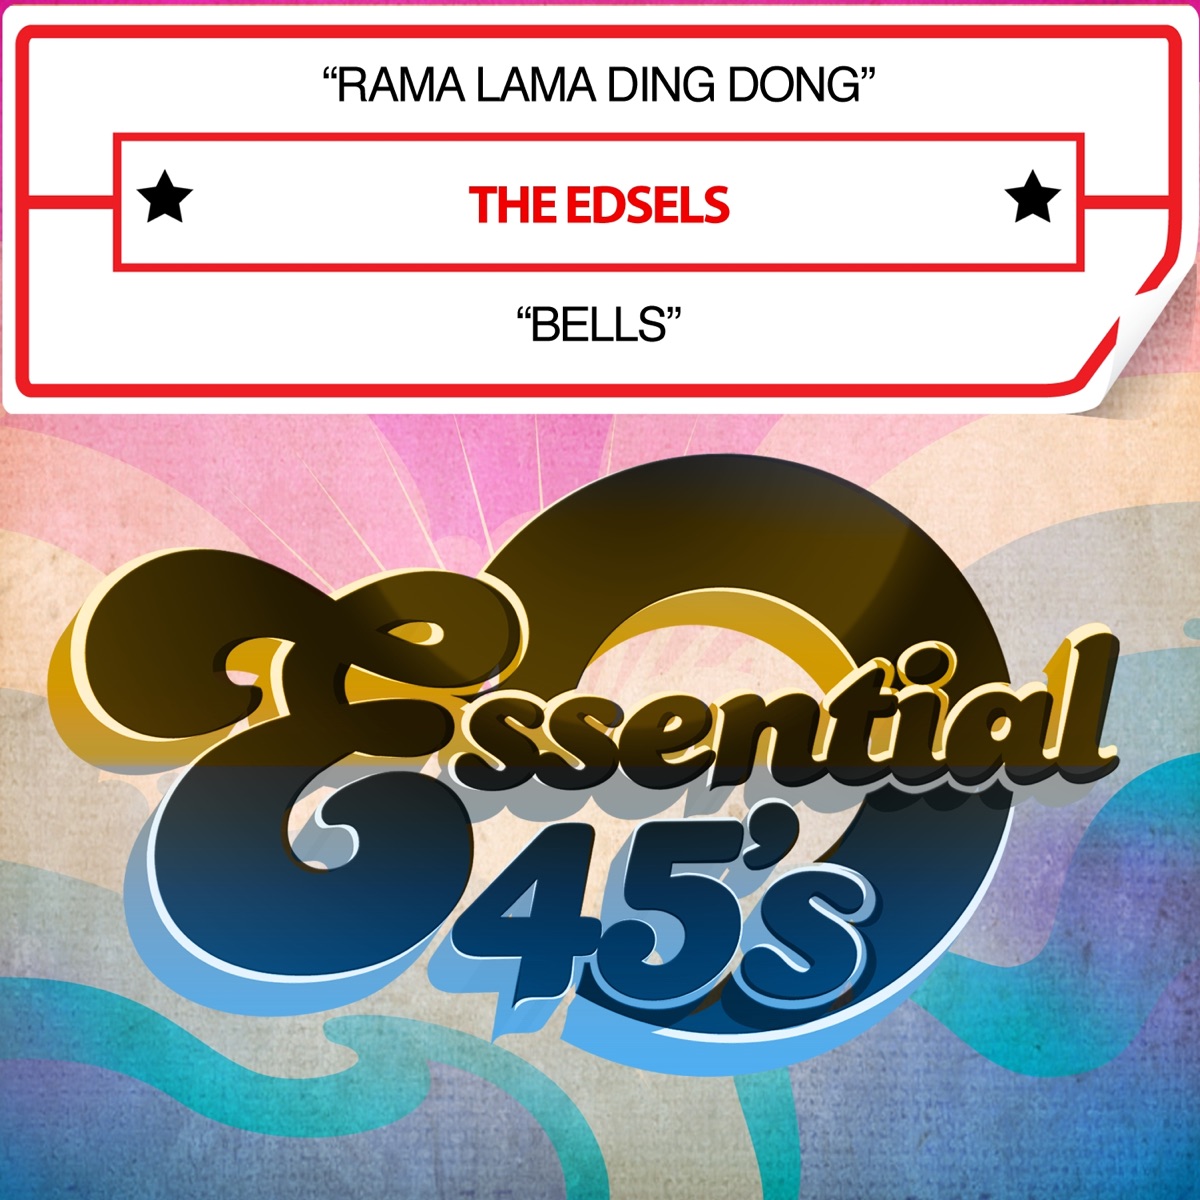 Rama Lama Ding Dong” álbum de The Edsels en Apple Music